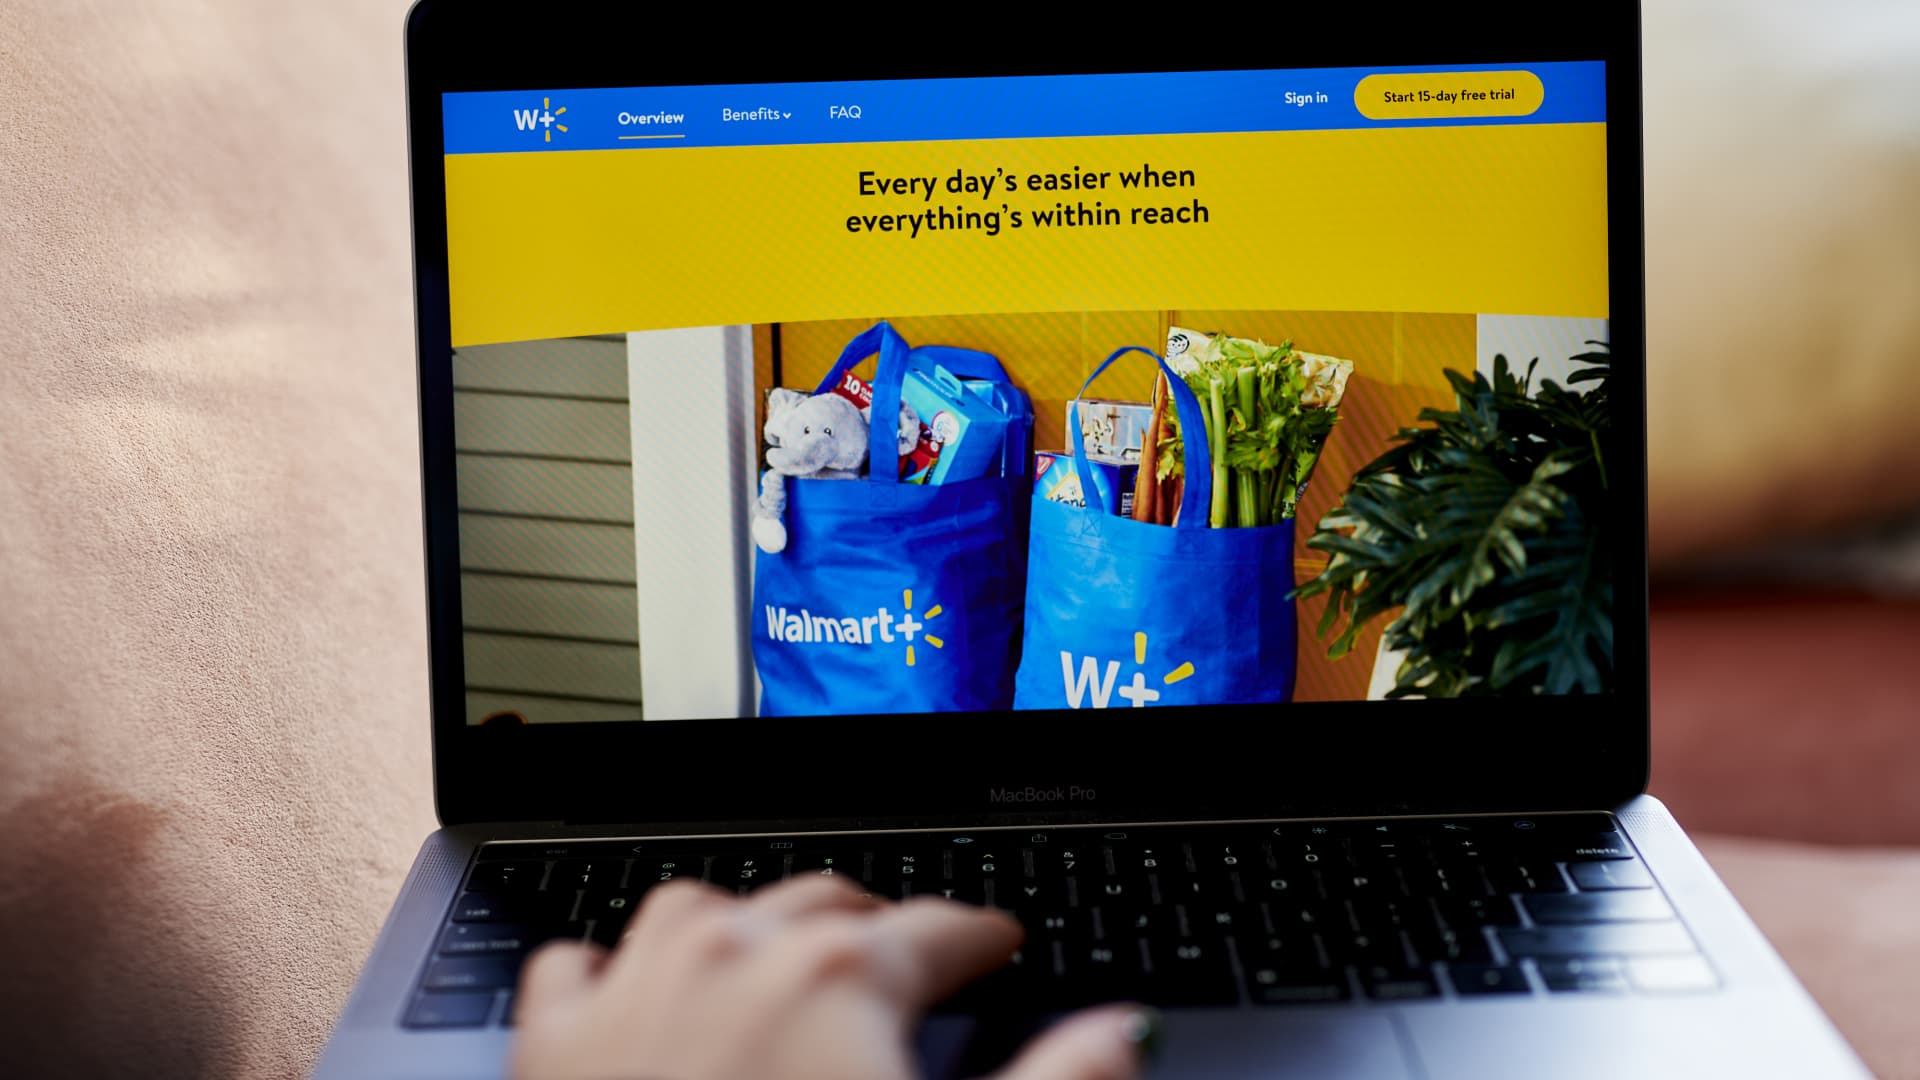 Walmart dangles deeper gas discounts to attract, retain subscribers